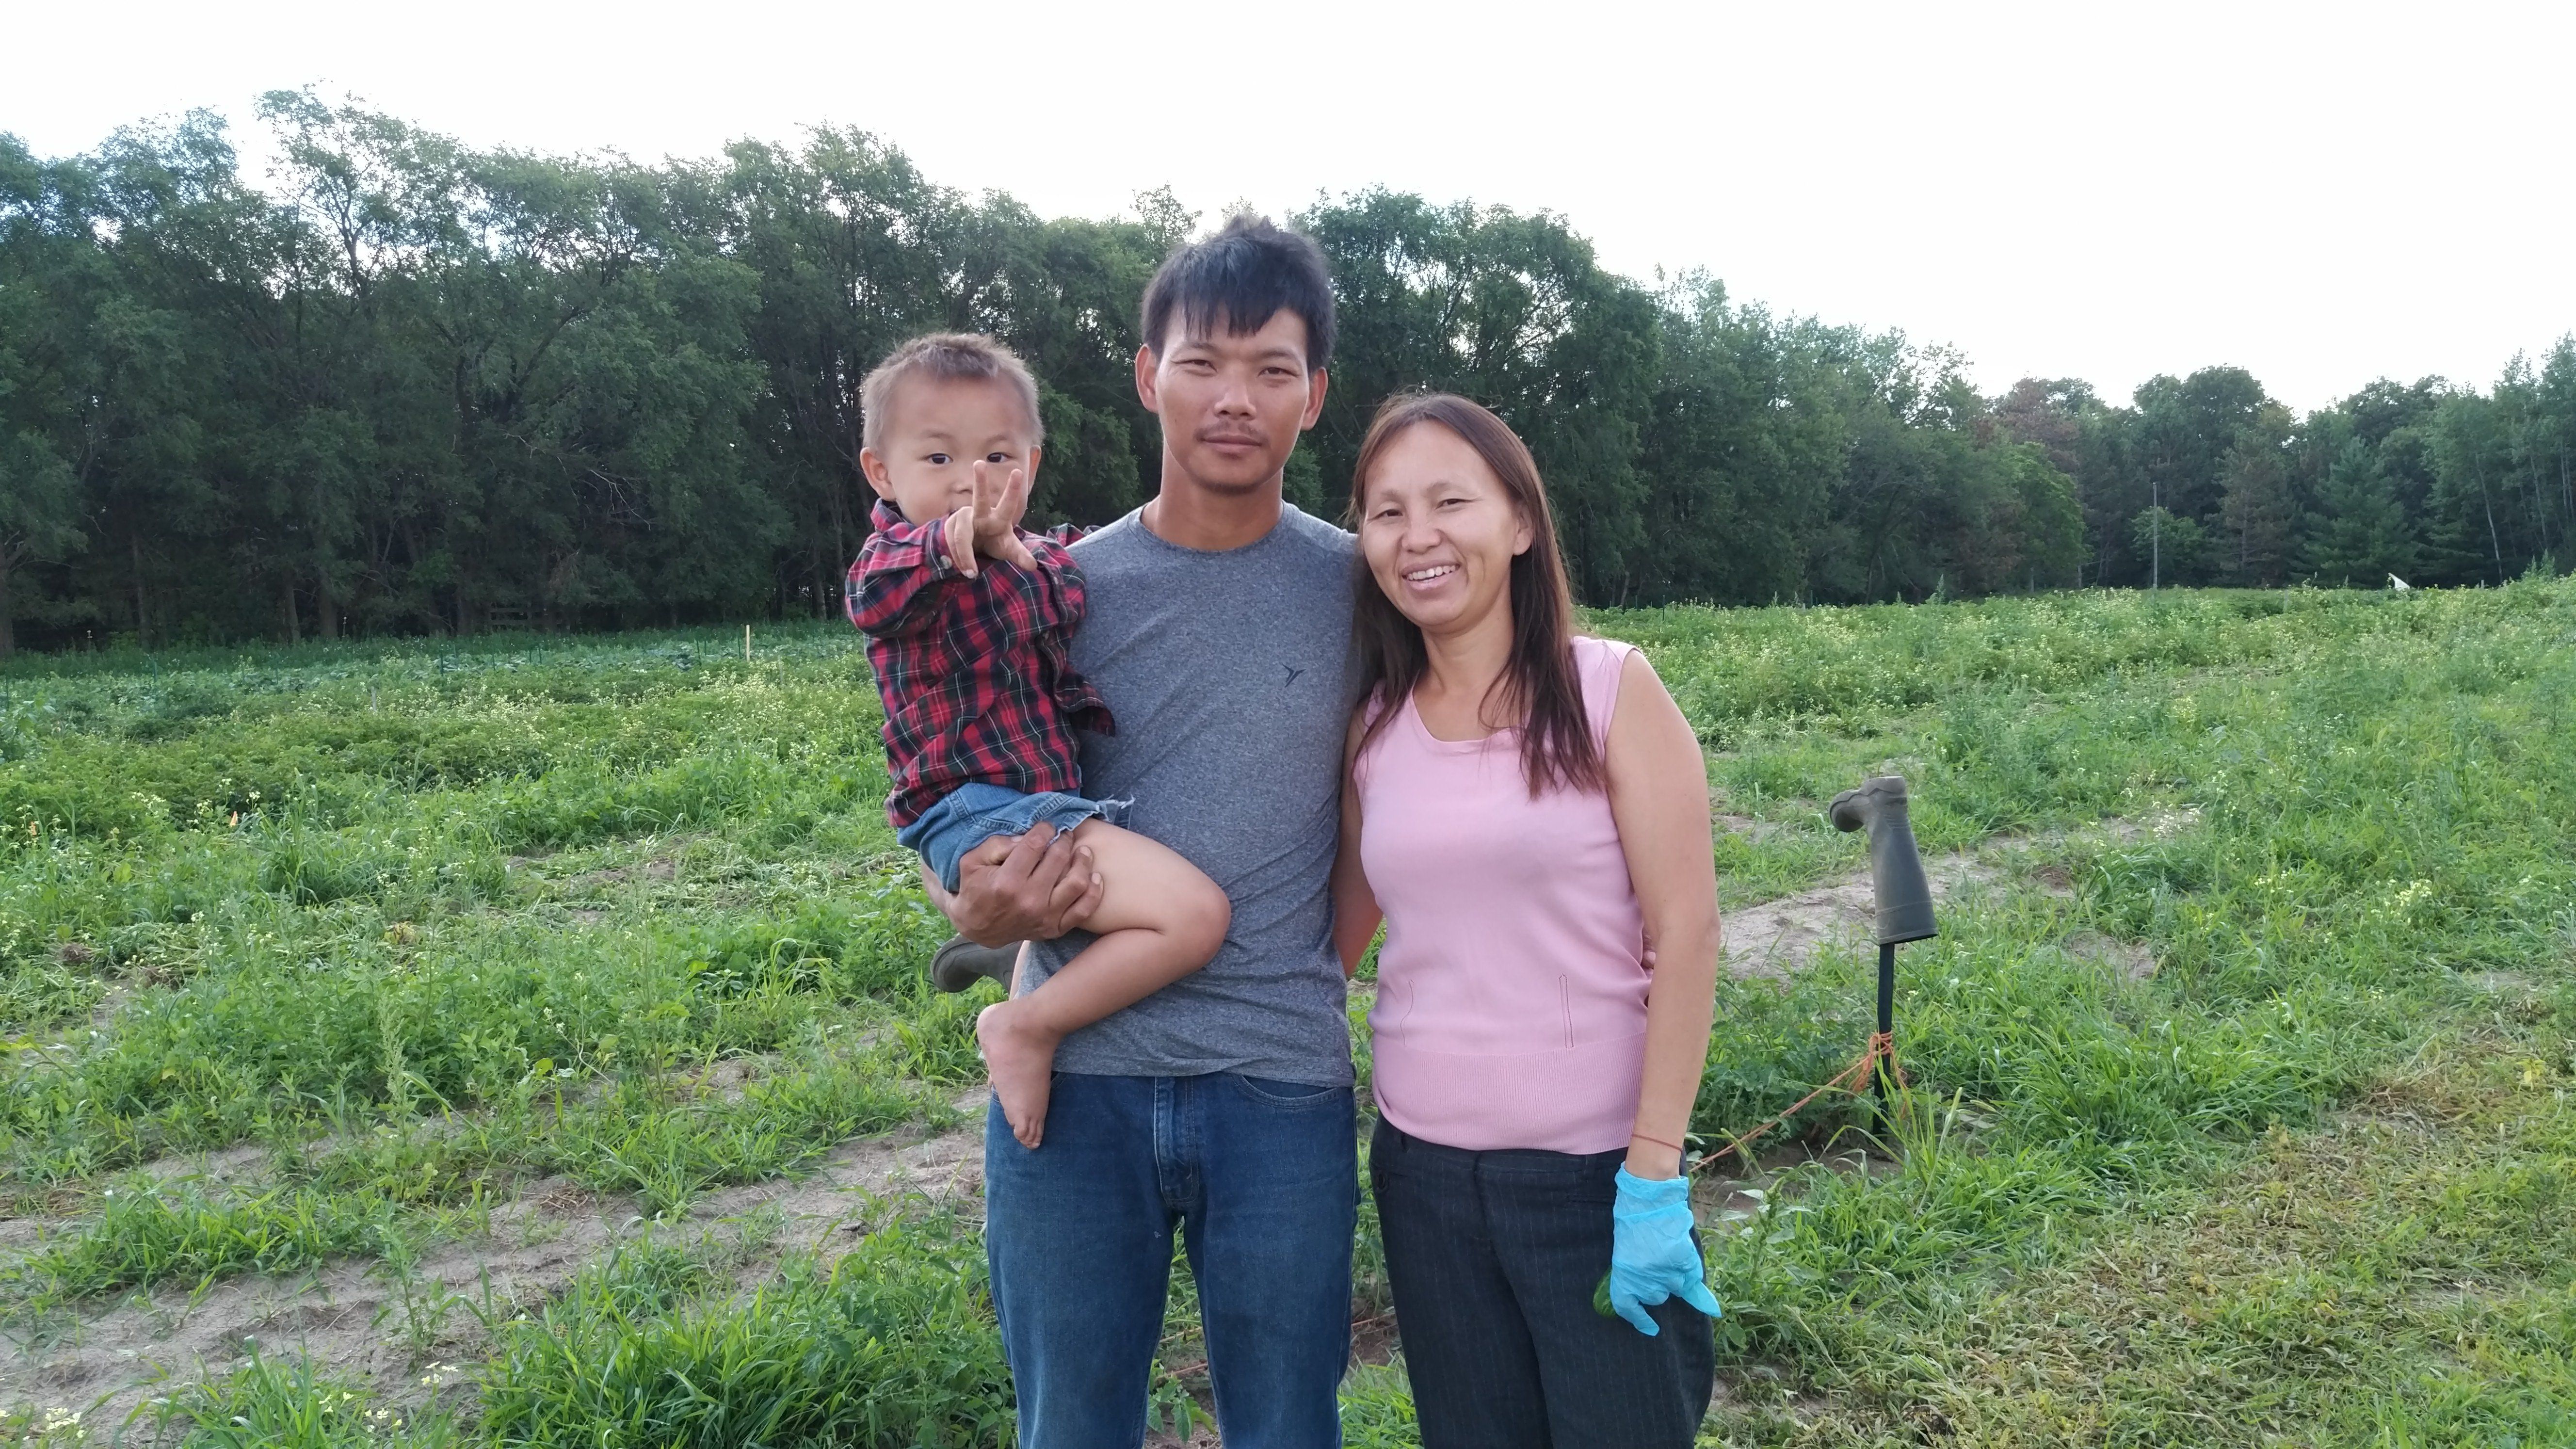 Previous Happening: Meet Farmers Choua & Xou